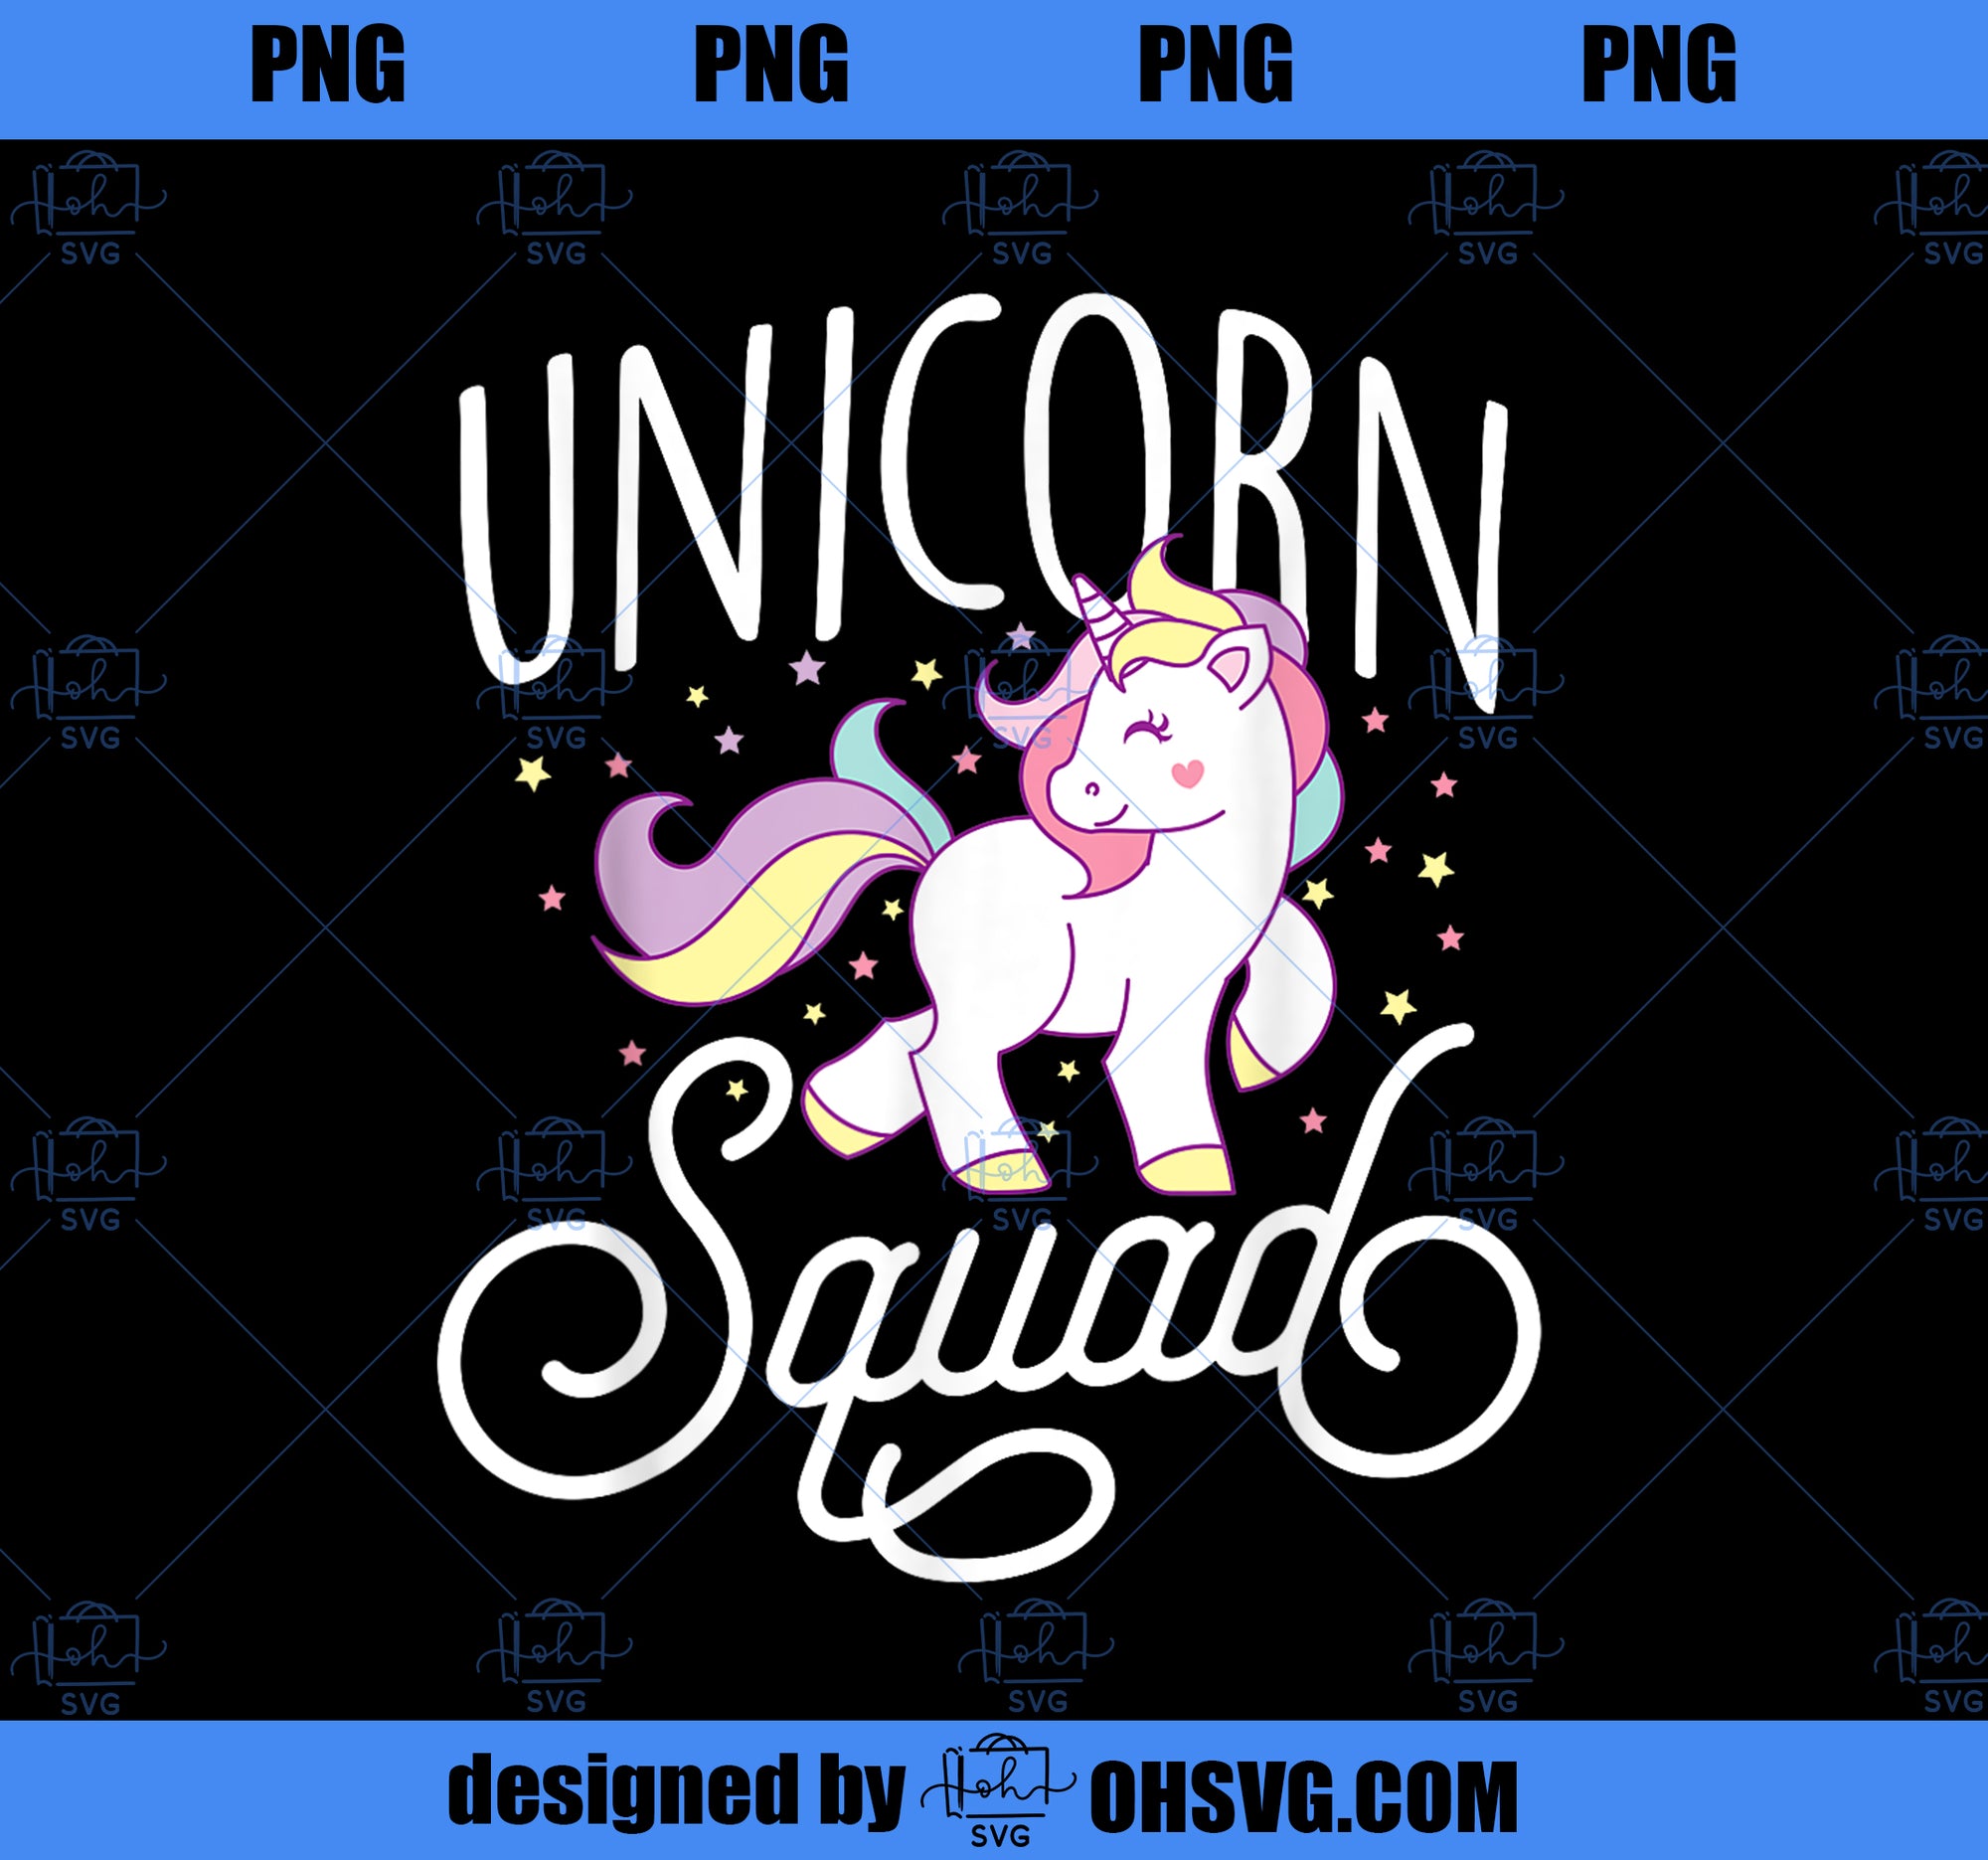 Unicorn Squad Cute Unicorn Lovers Gift PNG, Magic Unicorn PNG, Unicorn PNG